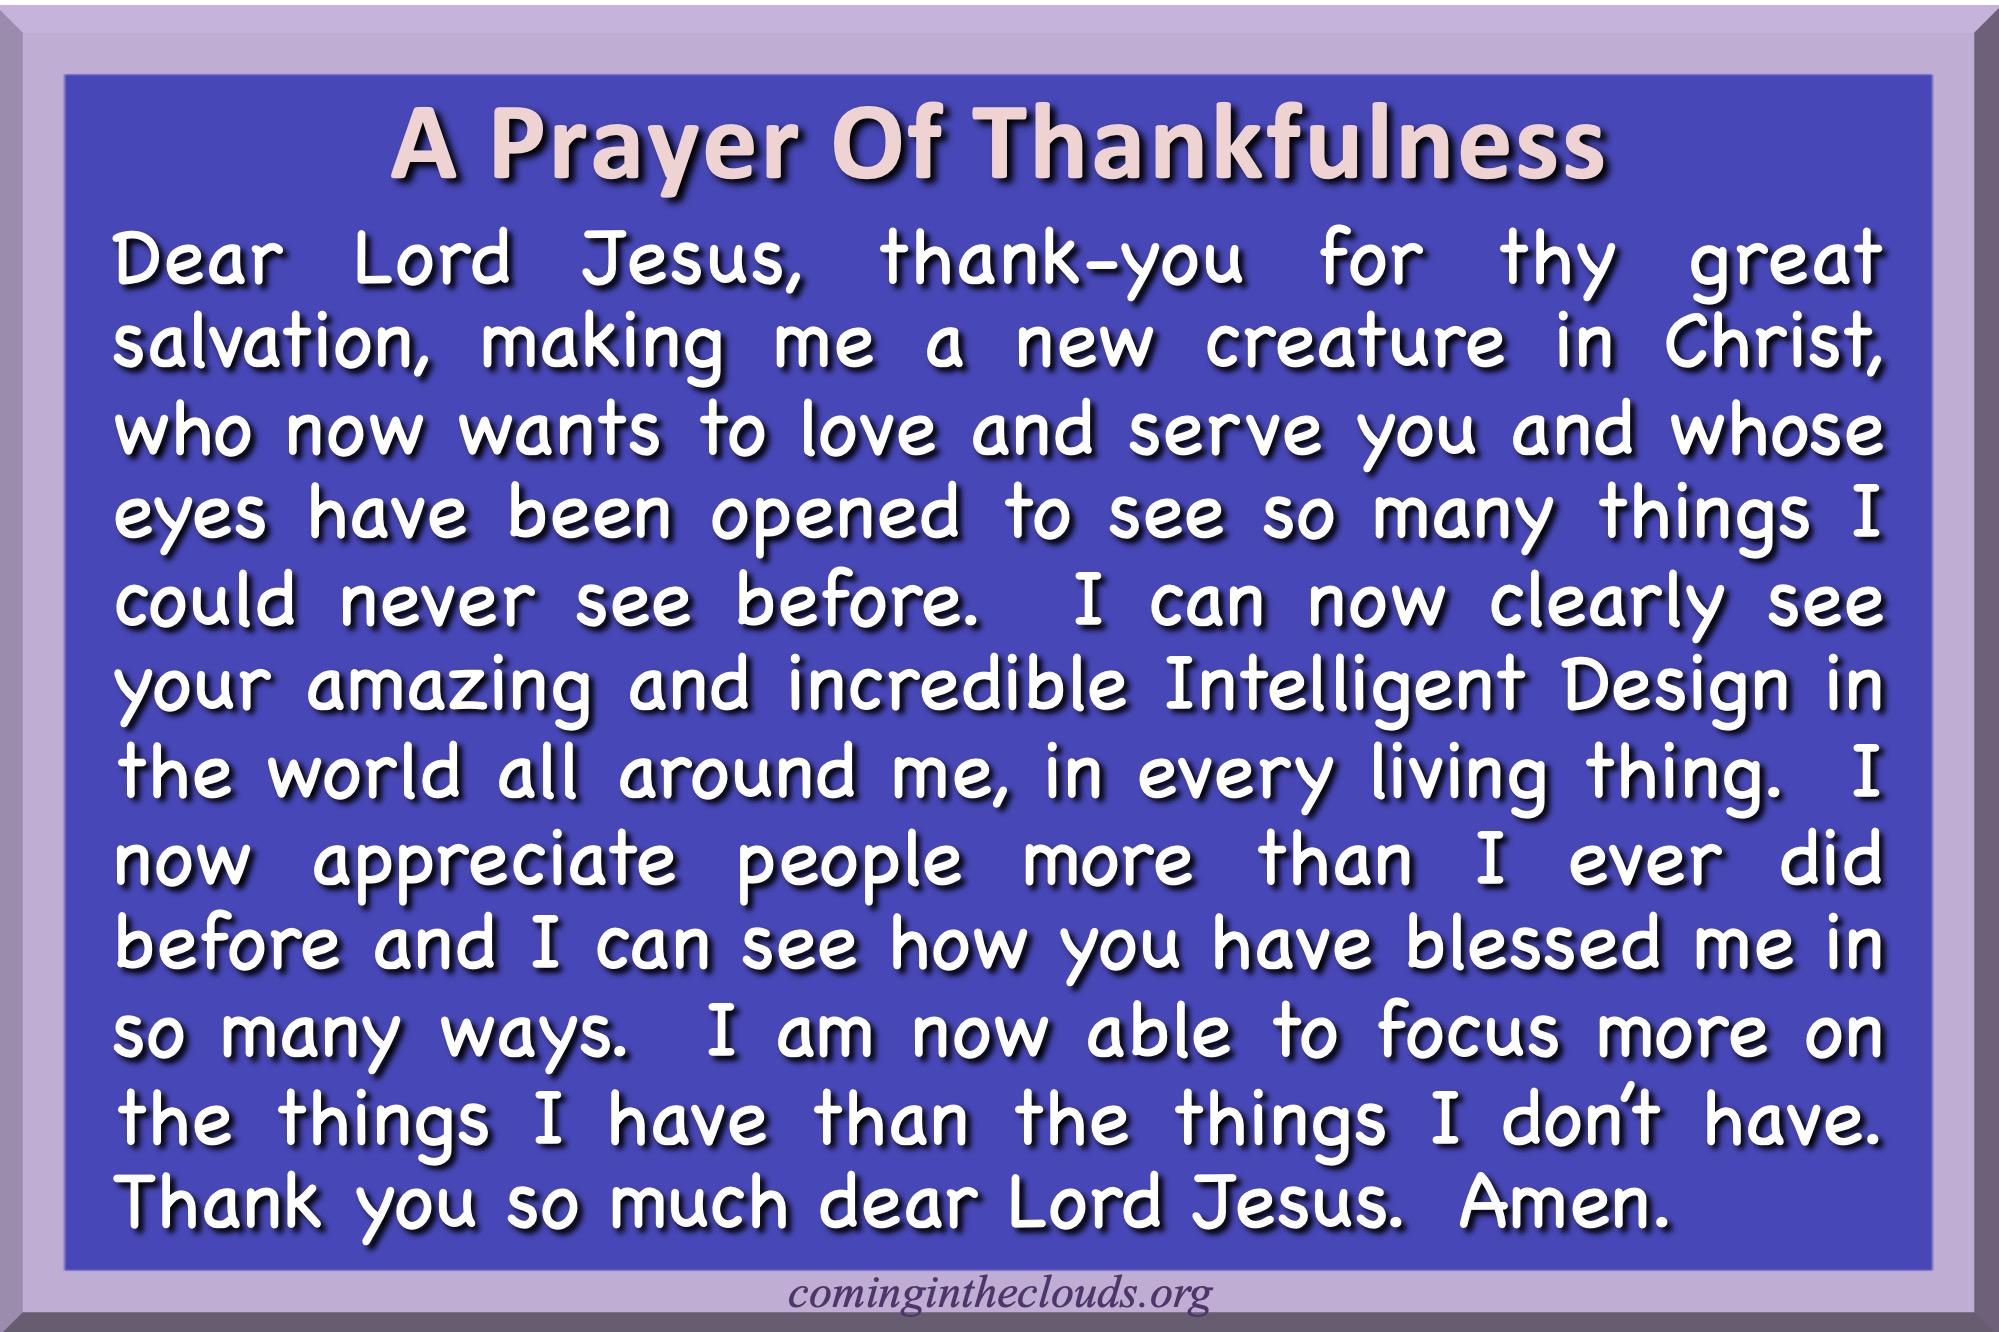 A prayer of thankfulness